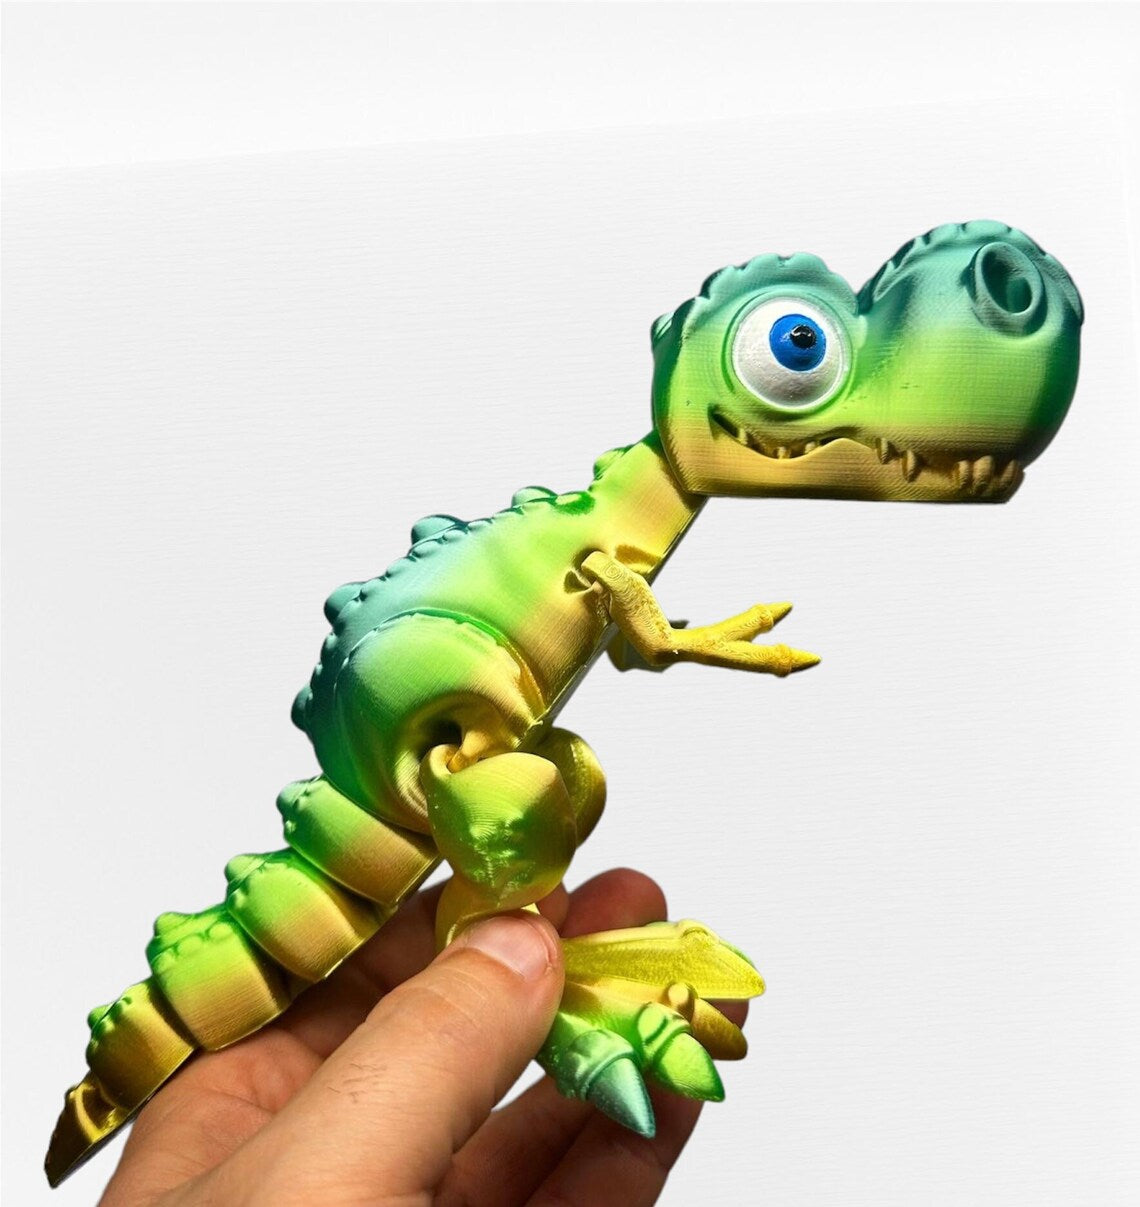 3D Printed TRex Dinosaur